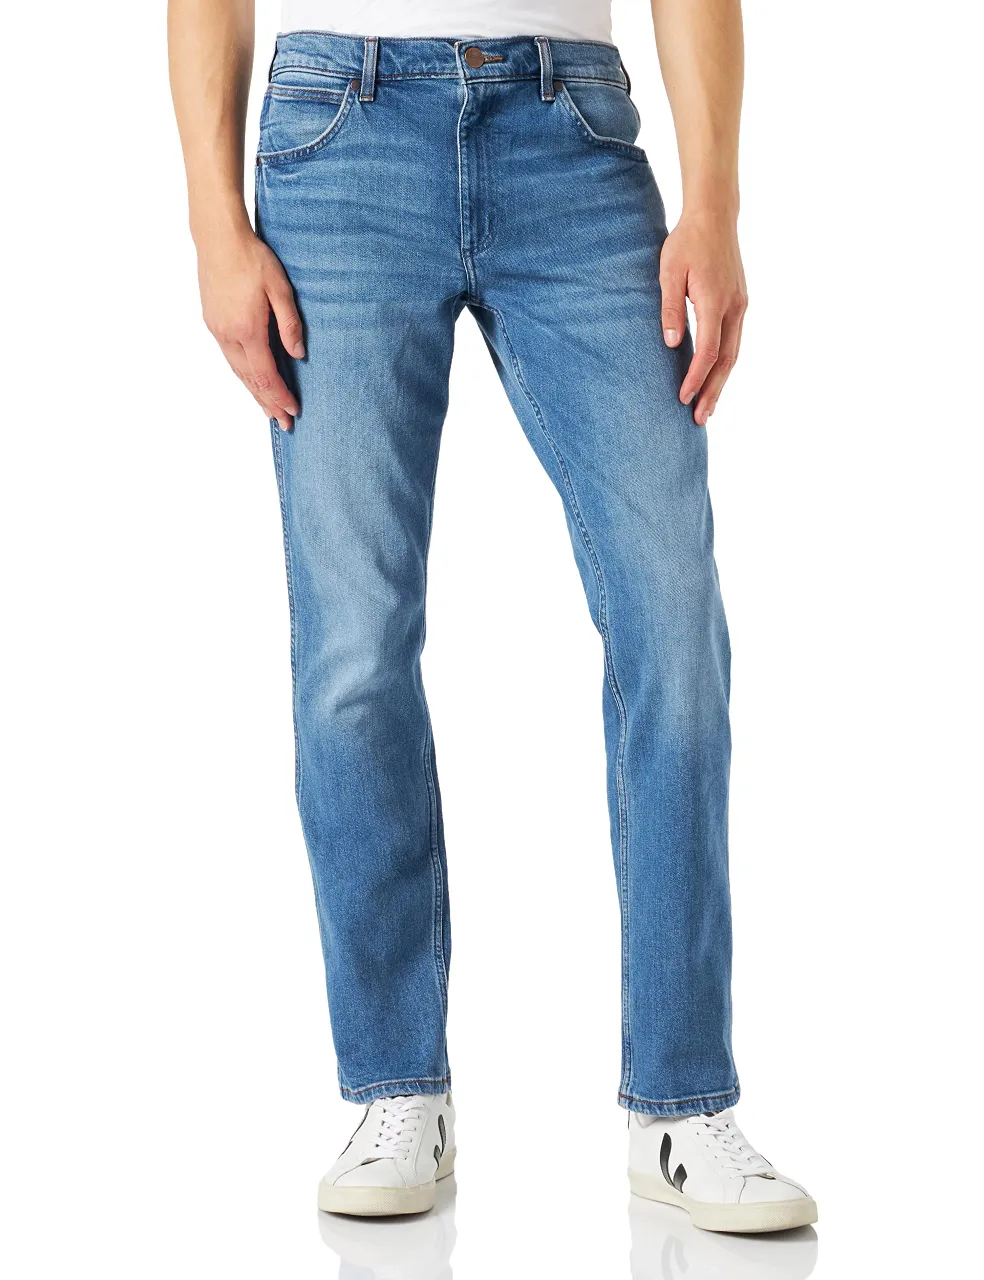 Wrangler Men's Greensboro New Favorite Jeans